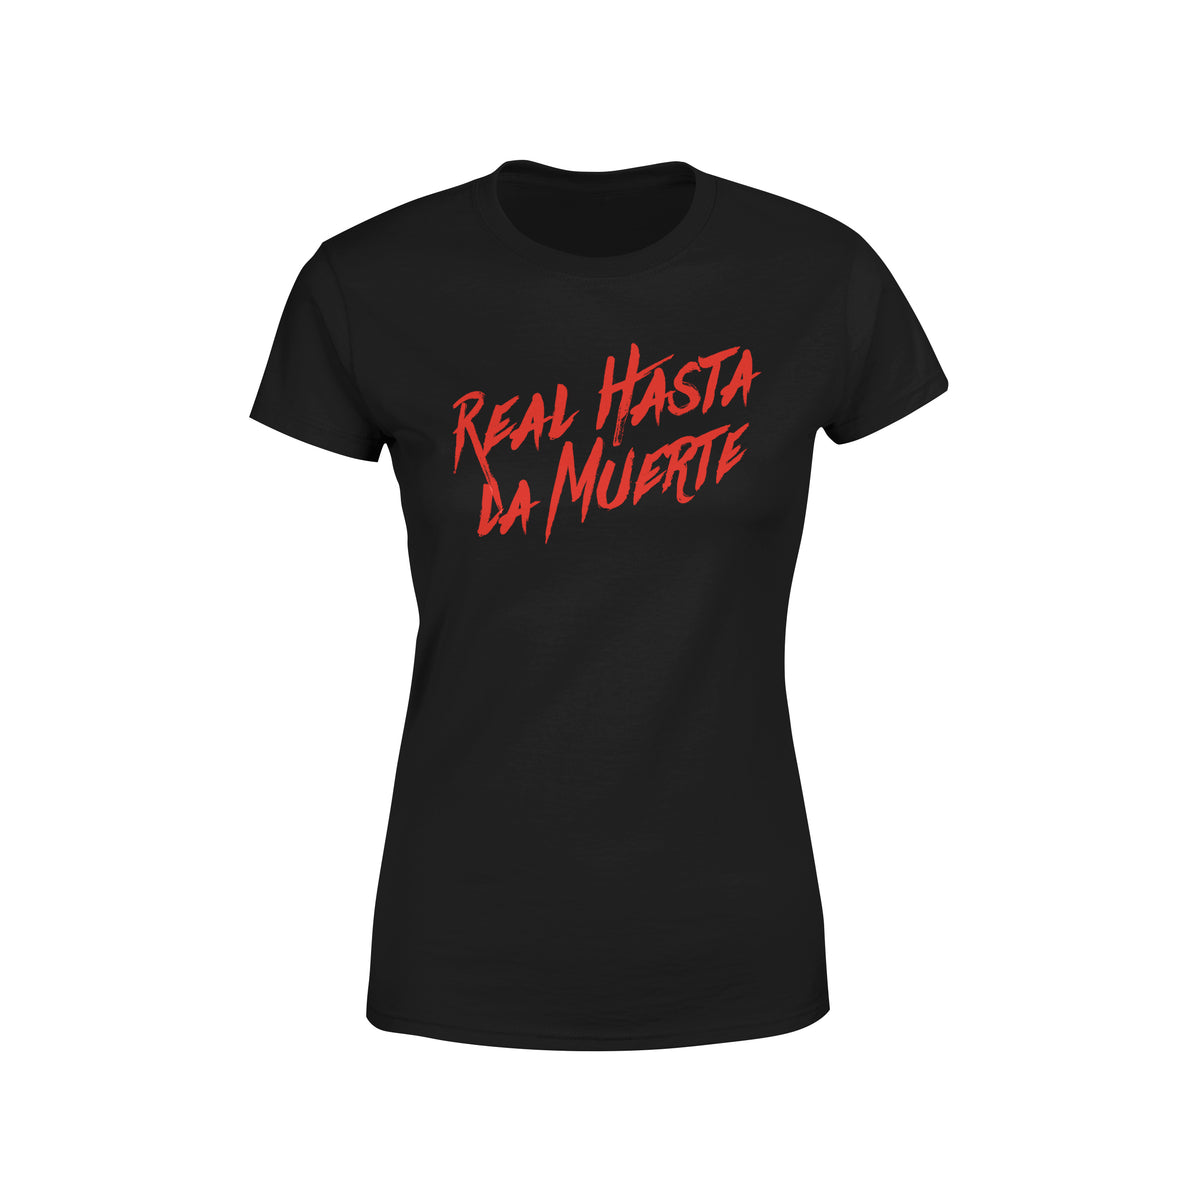 Real Hasta La Muerte Women's Tee - Black / Red